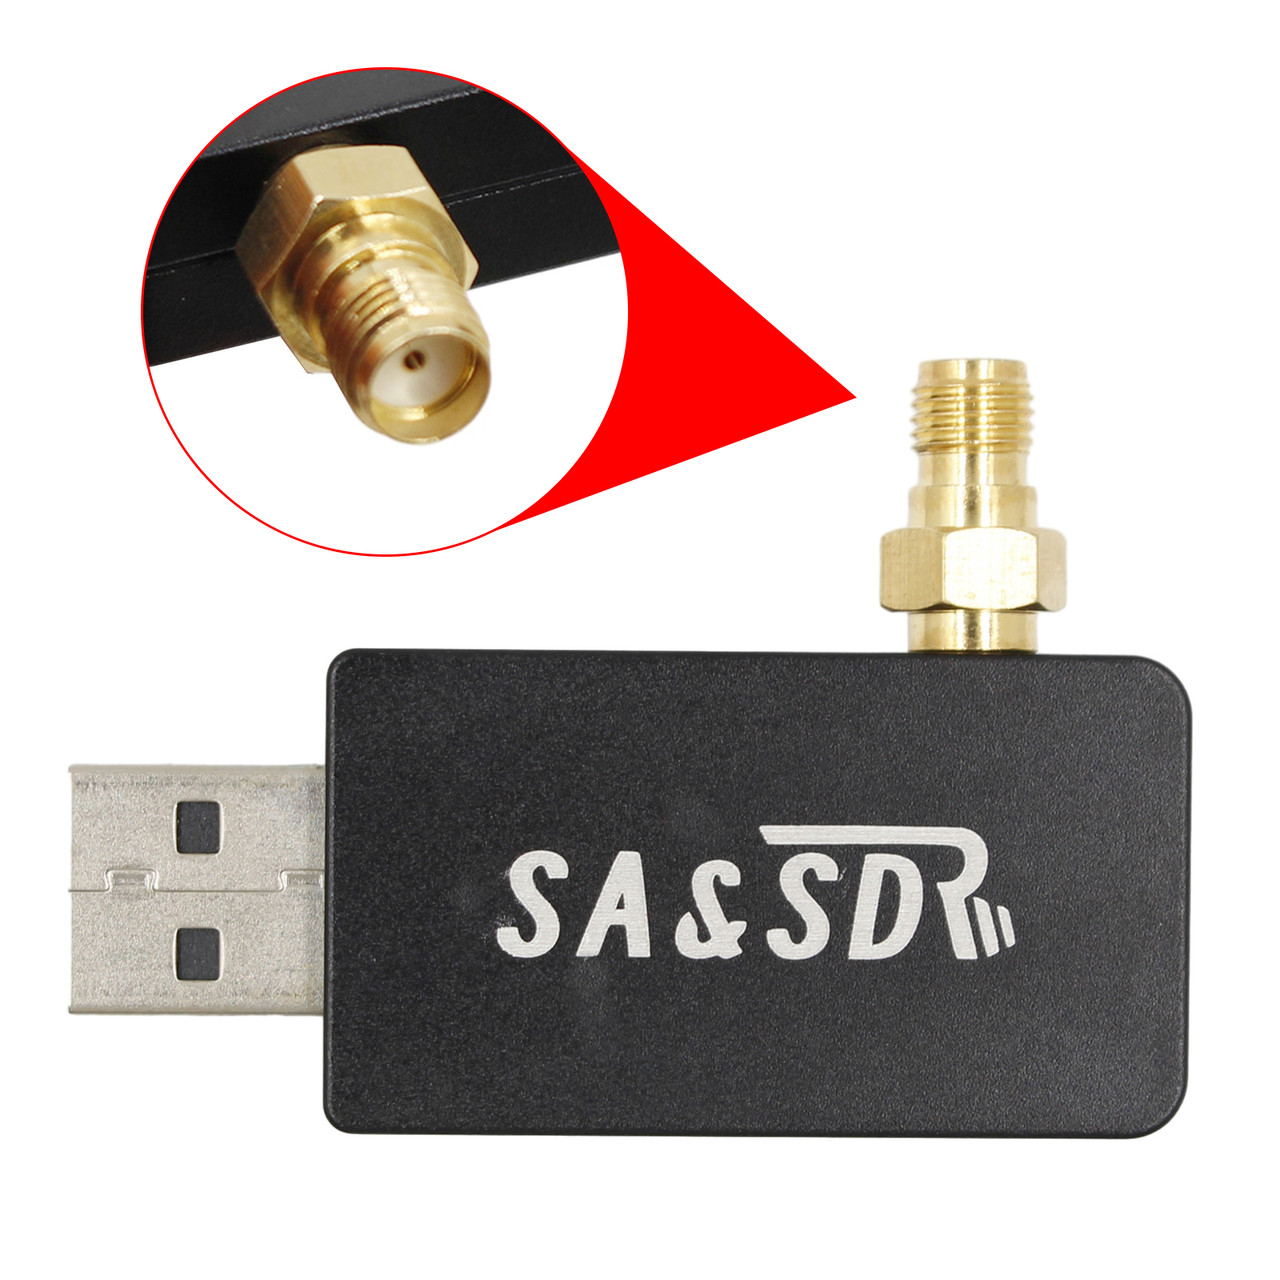 Mini SDR Receiver RF Analyzer Wideband Spectrum Analyzer Software Defined Radio